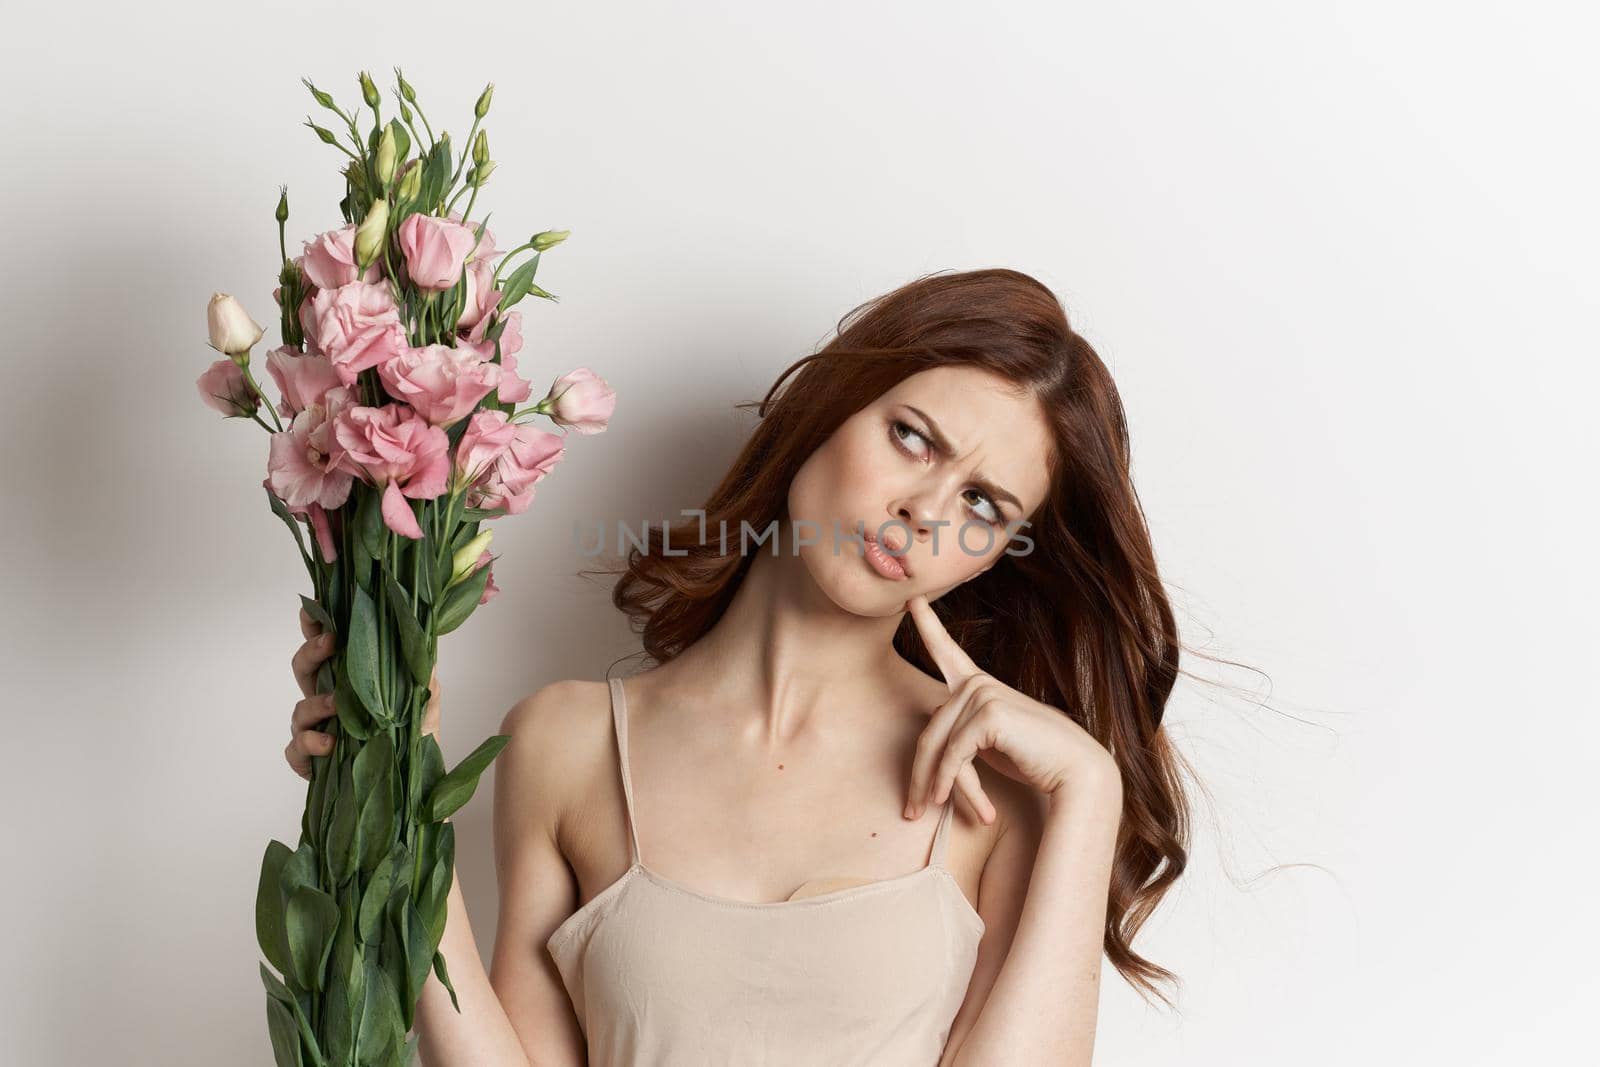 cheerful woman pink flower bouquet fashion summer lifestyle glamor by Vichizh